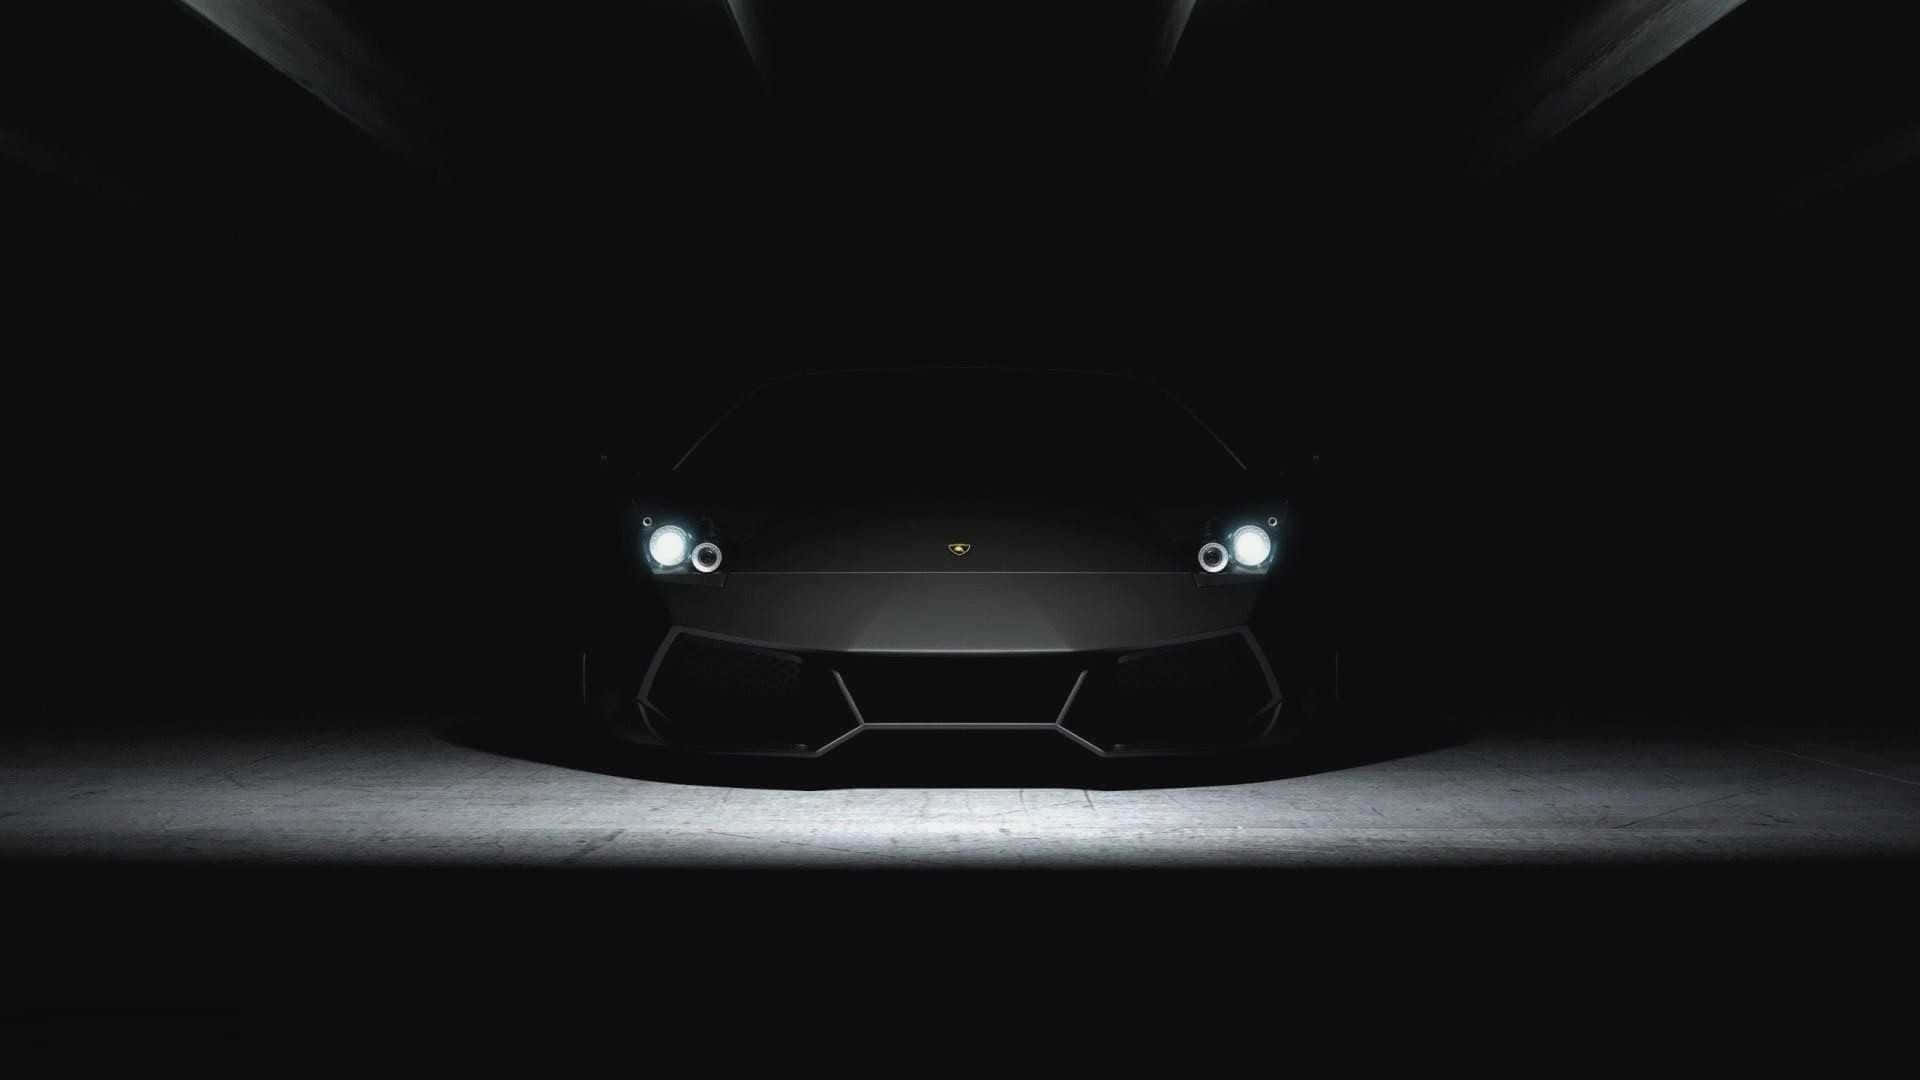 Oled Monitor Black Lamborghini Murciélago Wallpaper